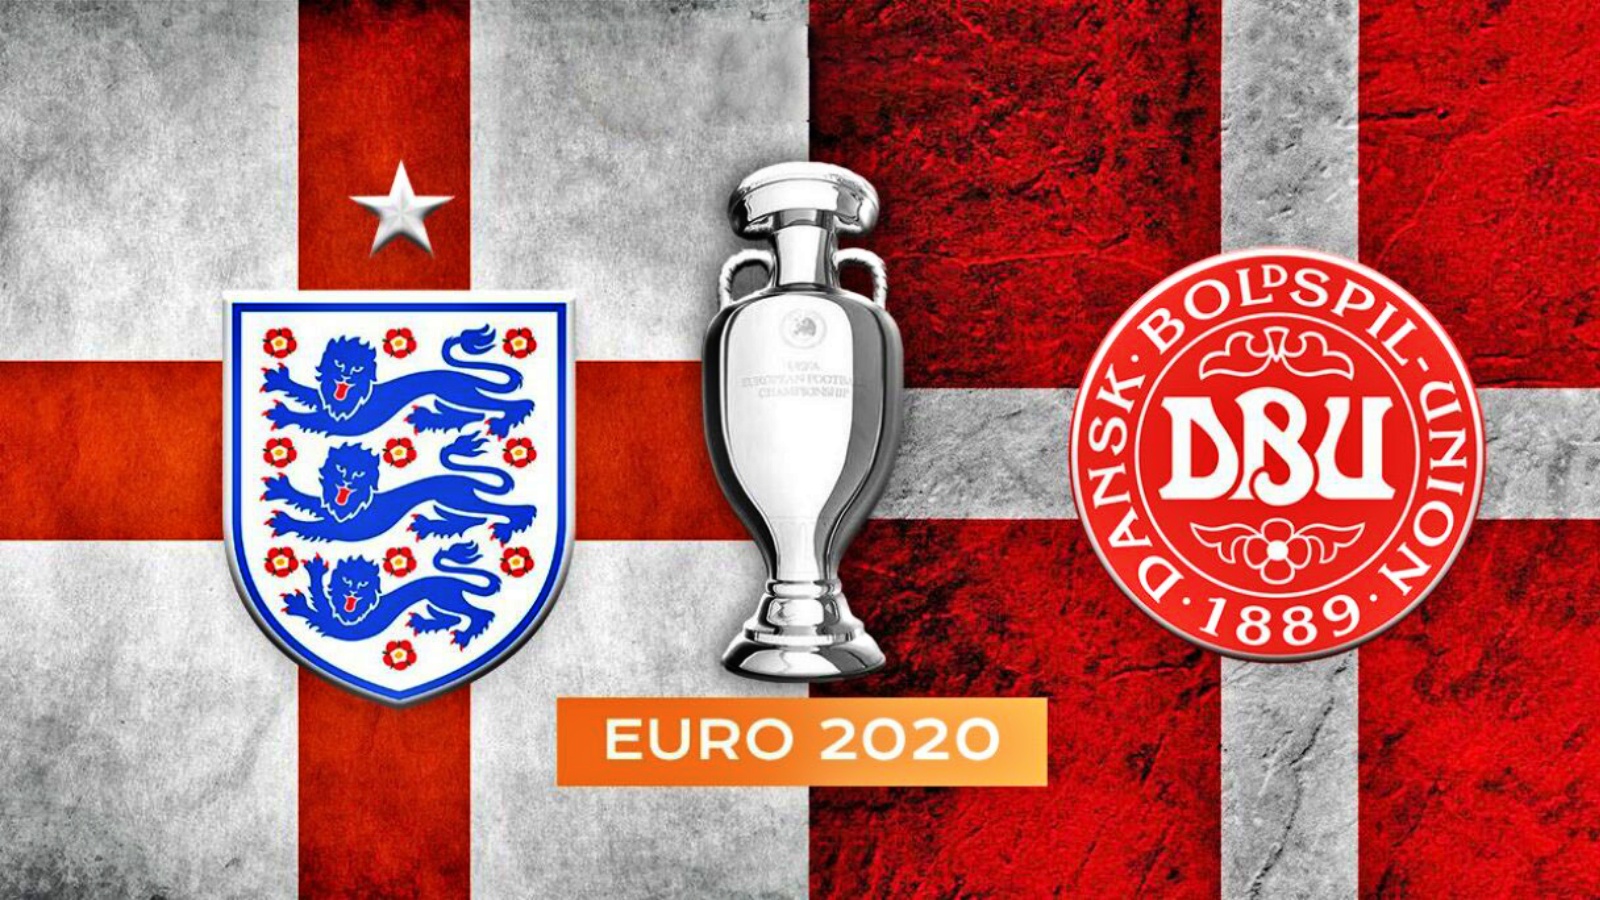 ANGLIA - DANEMARCA LIVE PRO TV EURO 2020